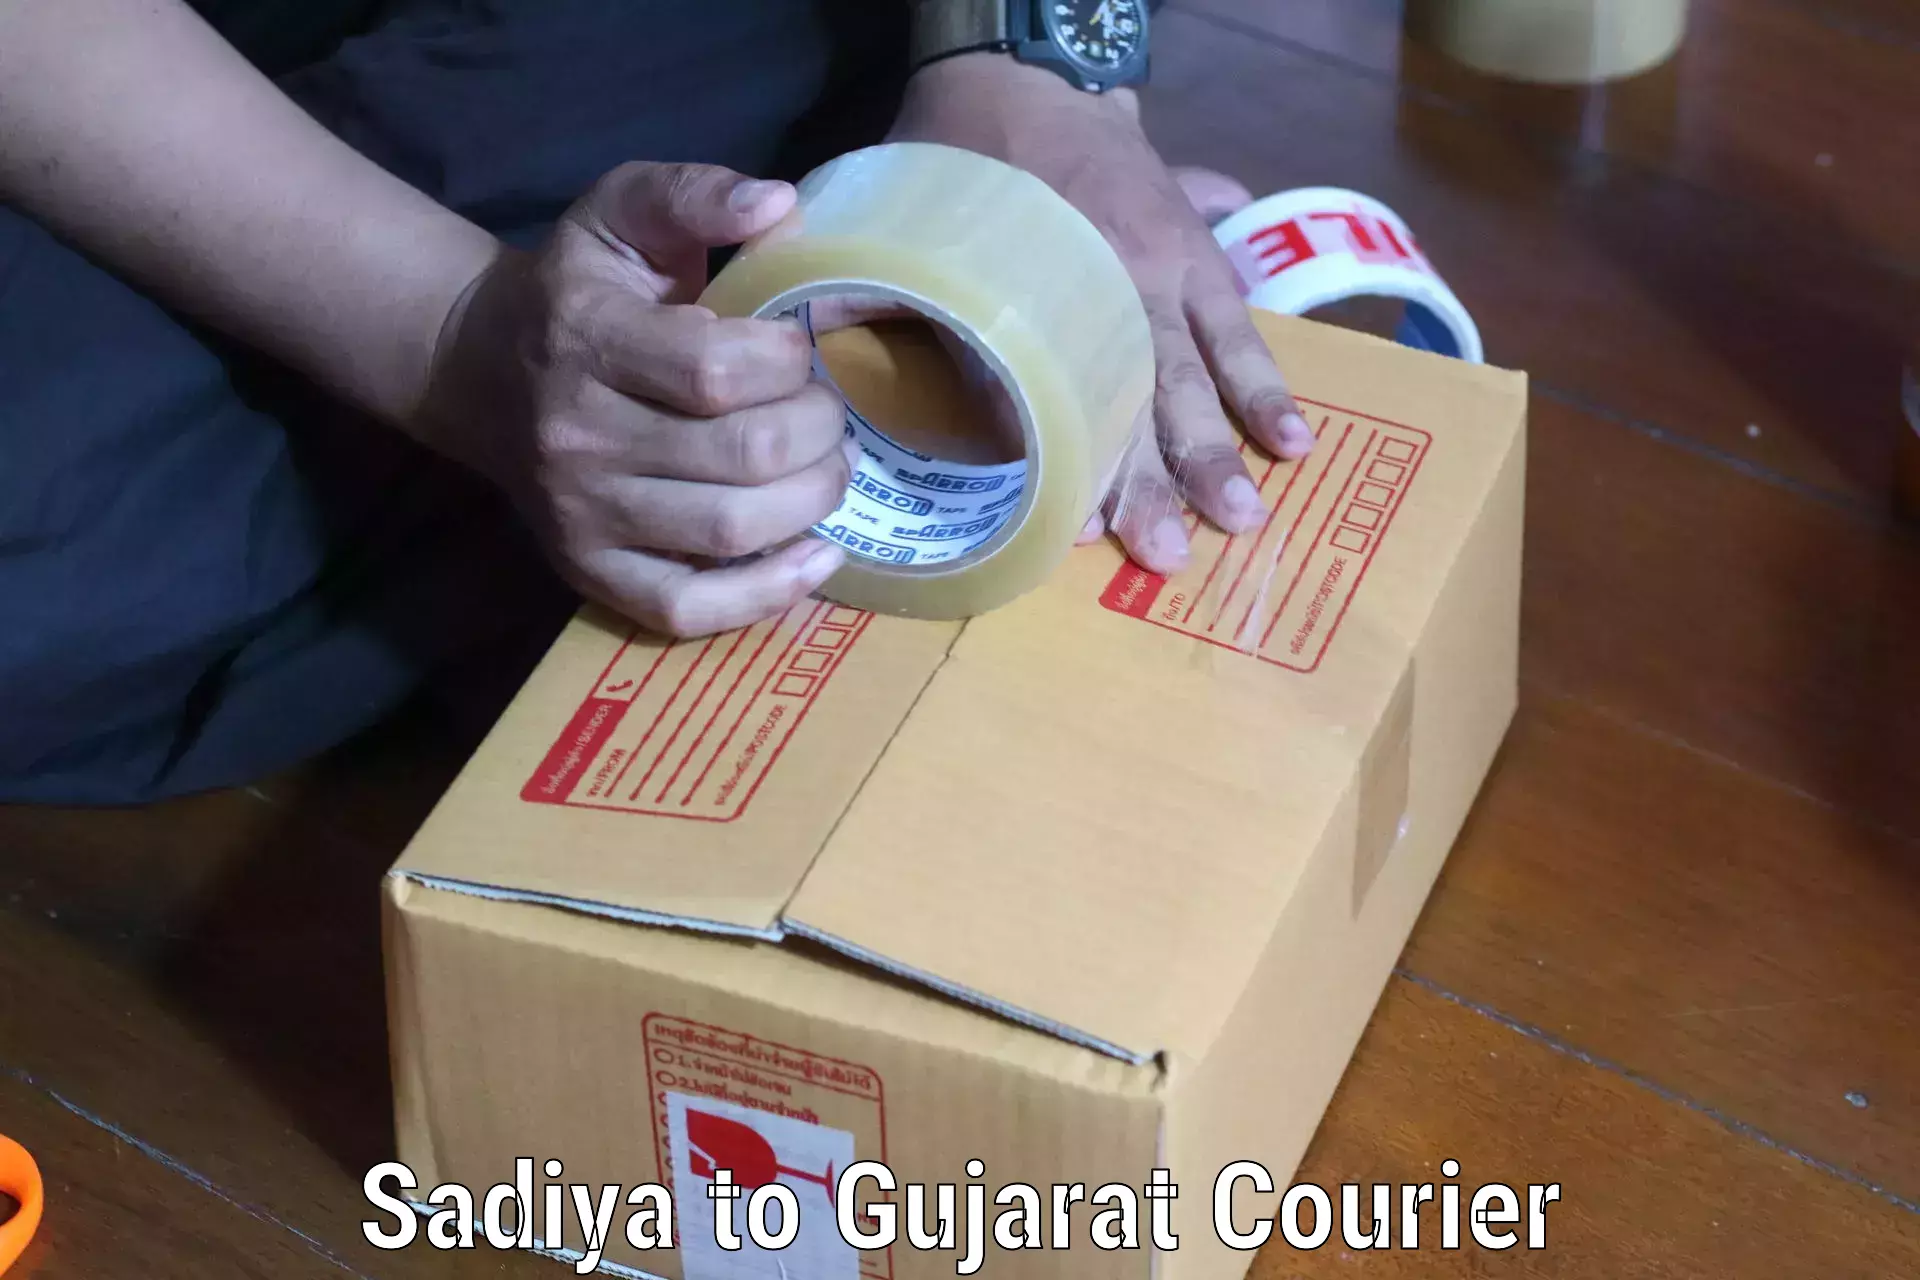 Cargo delivery service Sadiya to Matar